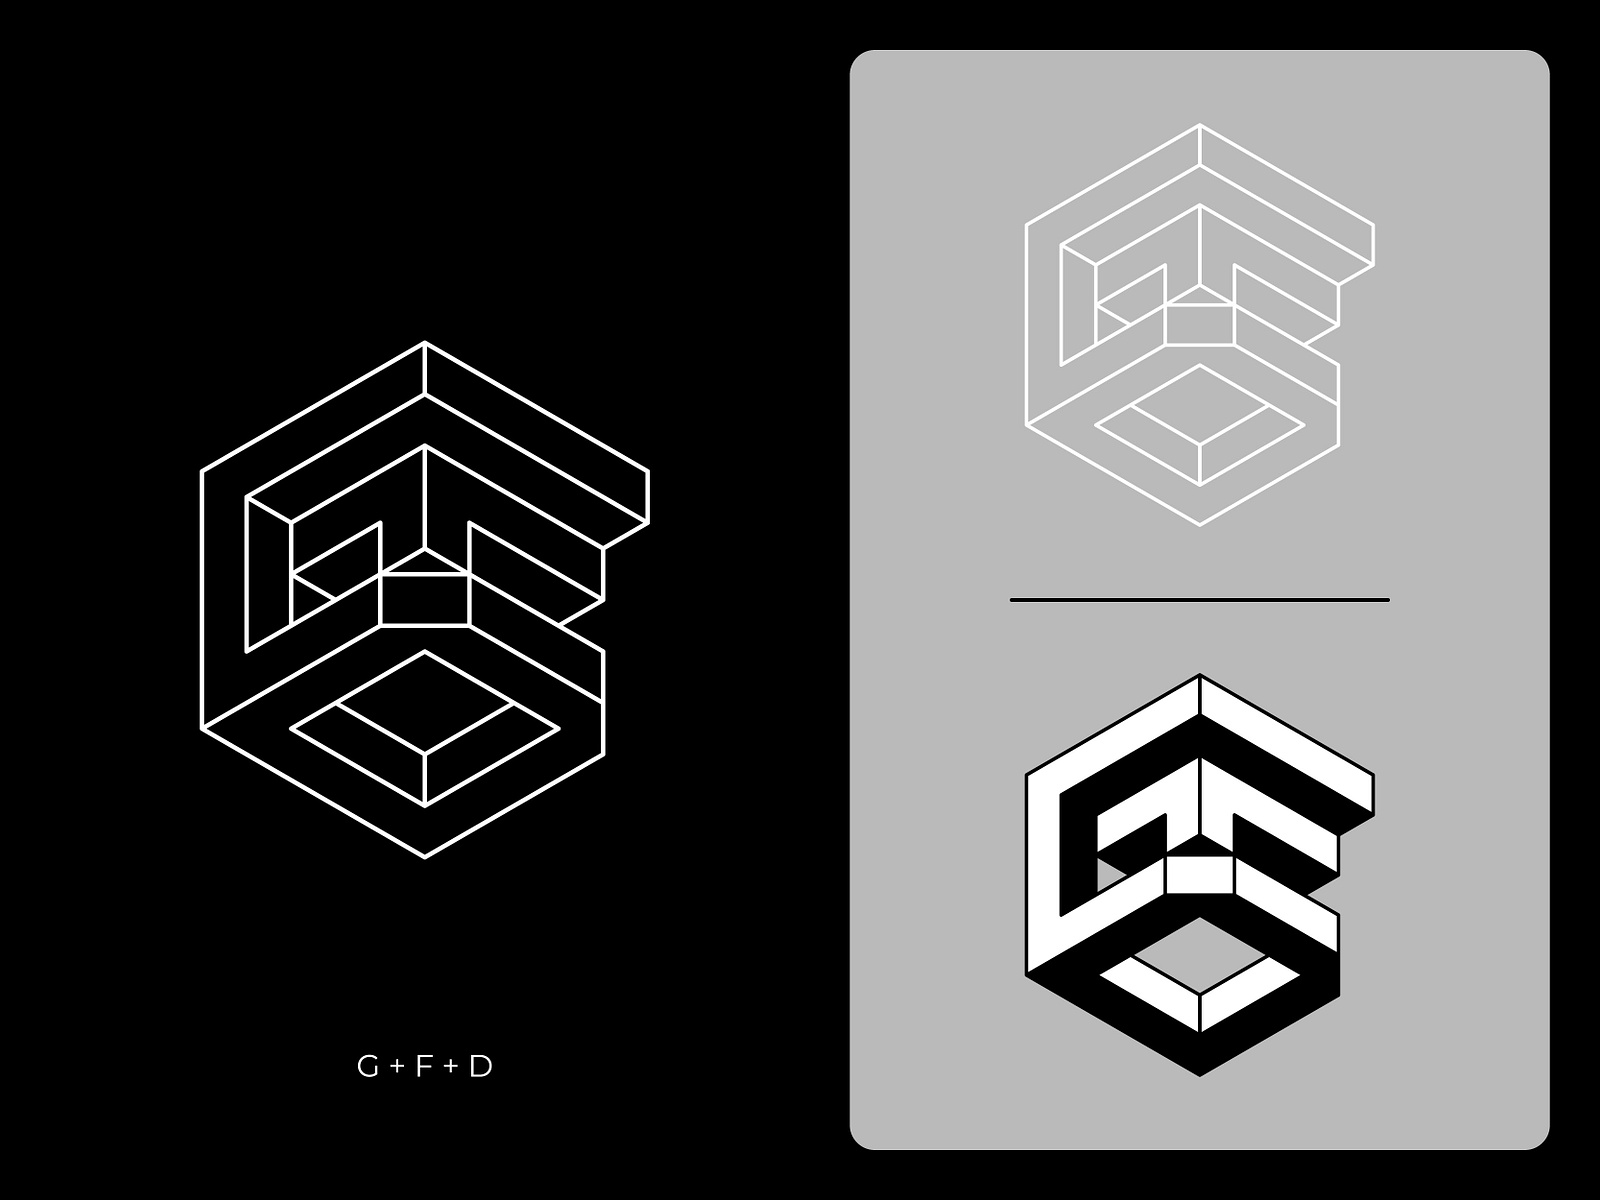 G + F + D monogram by Ghitea Florin on Dribbble